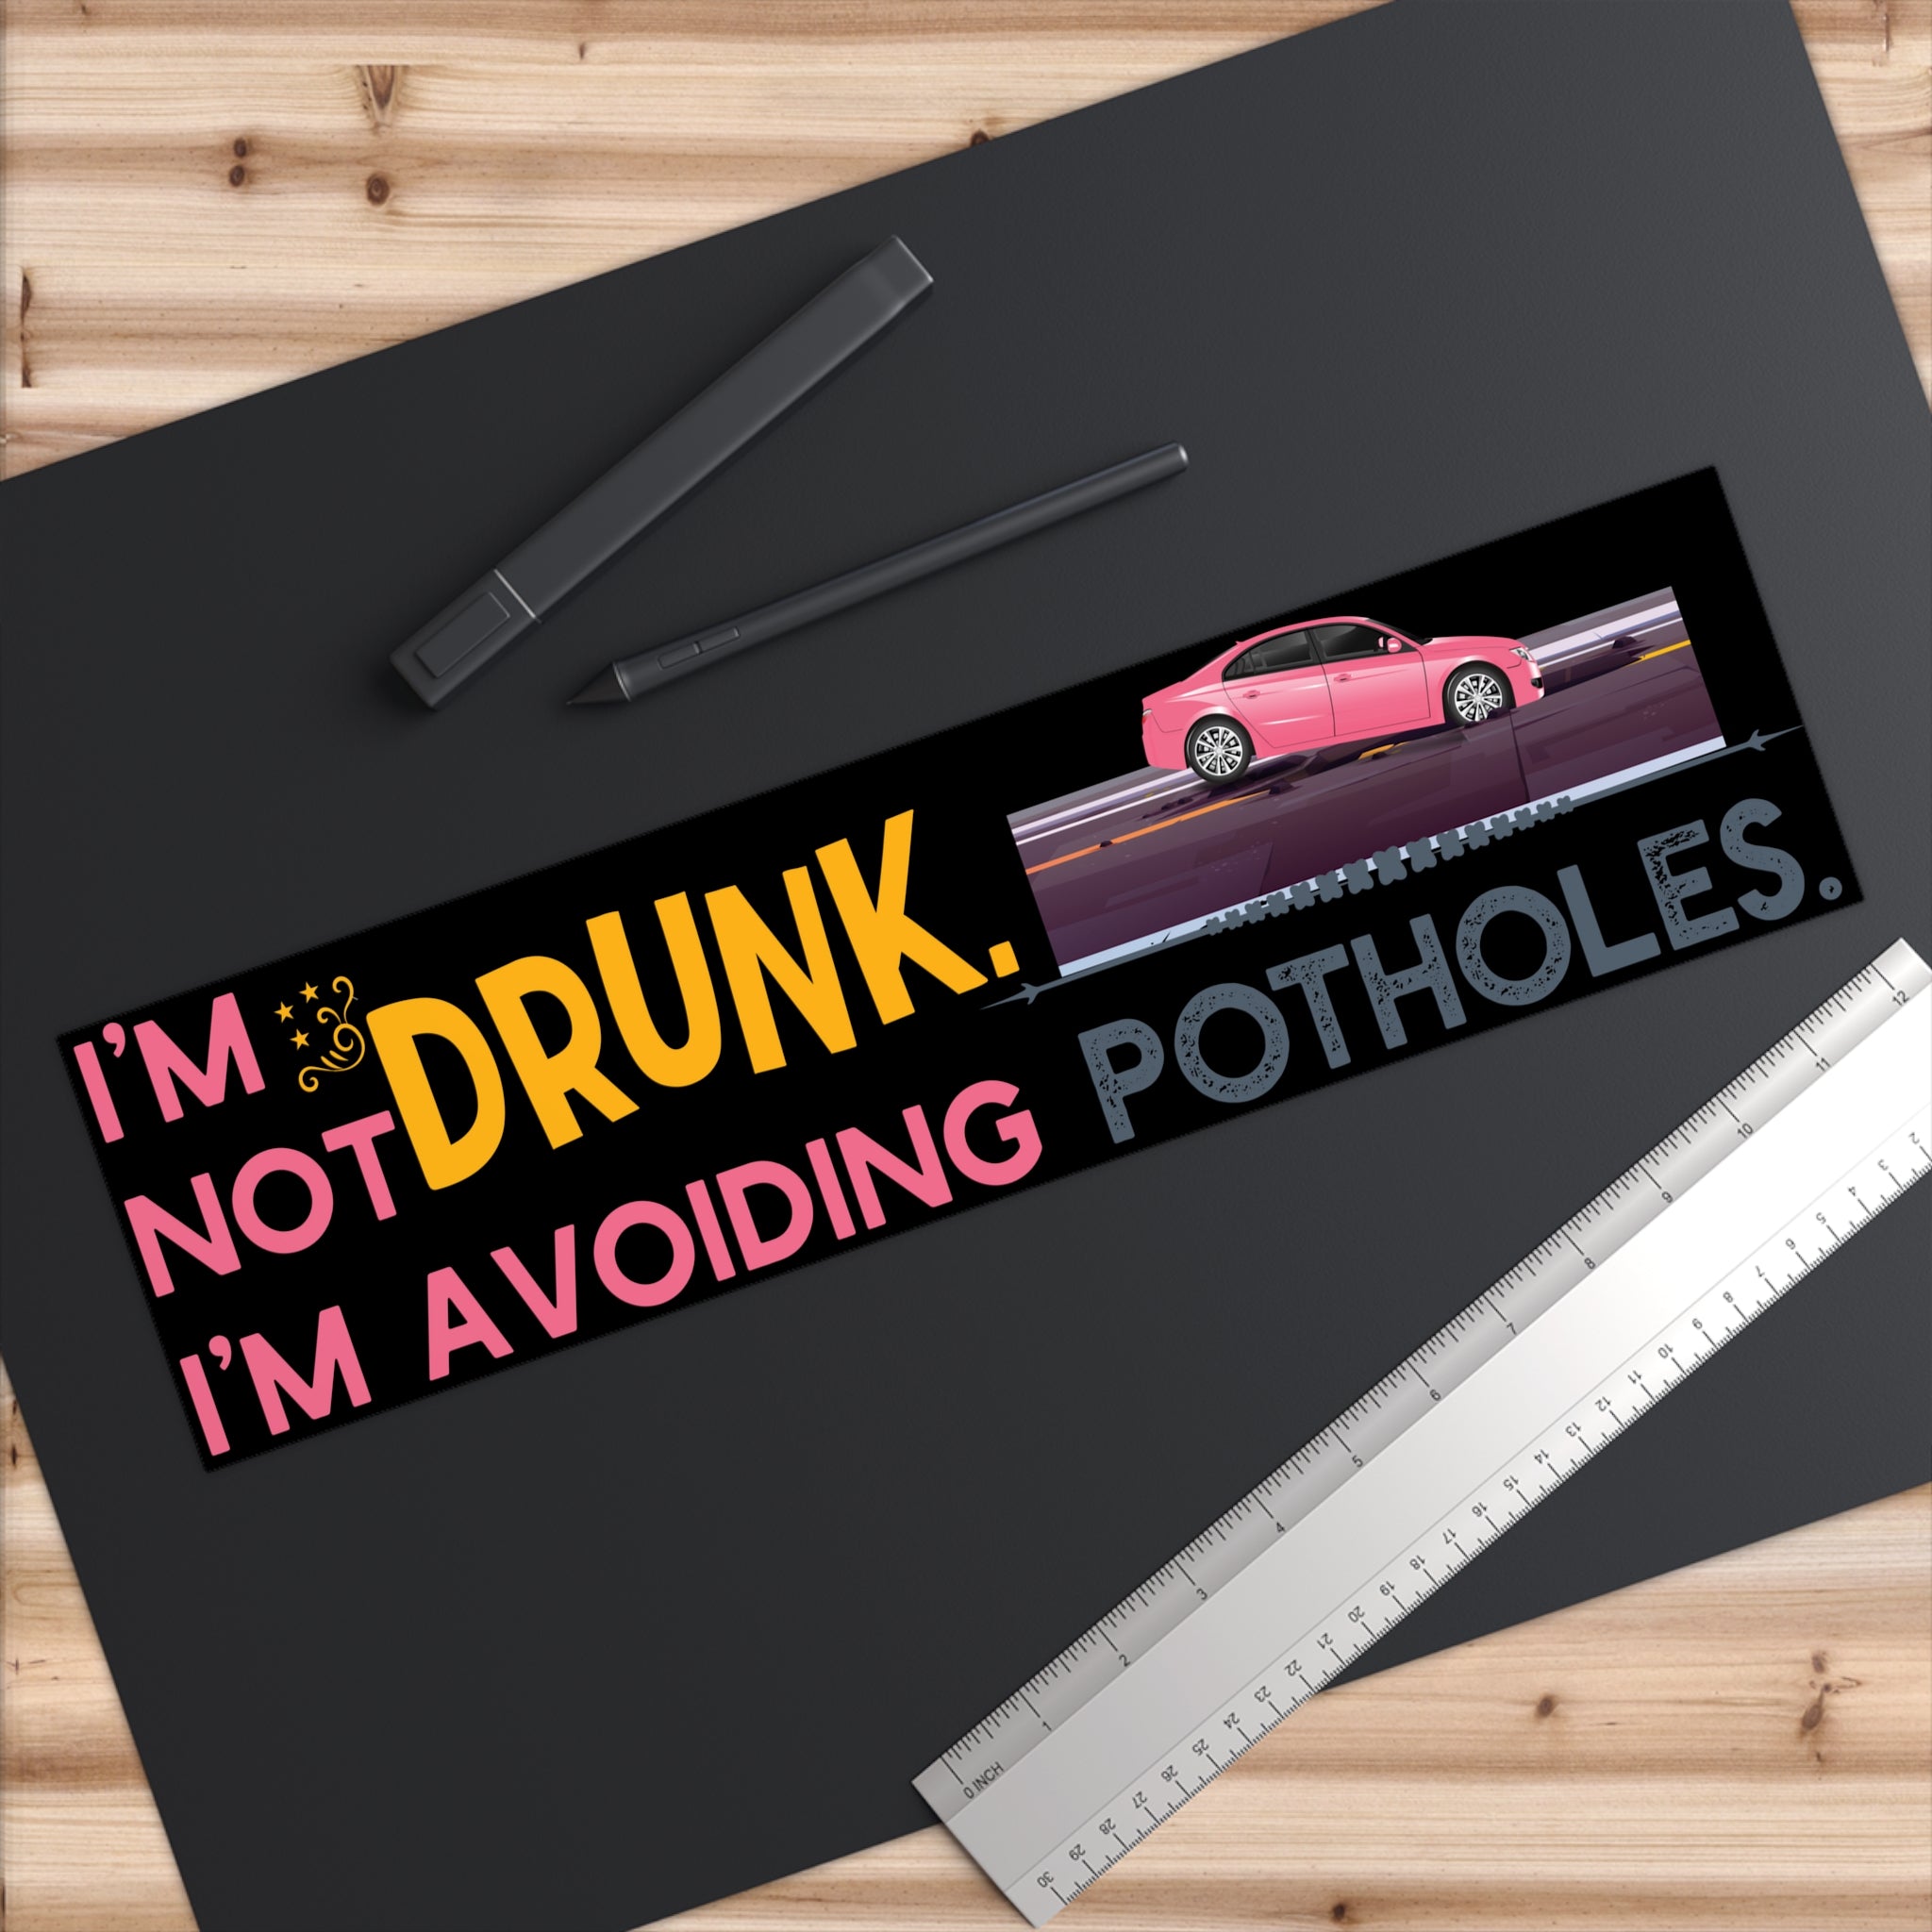 I'm not DRUNK, Potholes - Pink Car